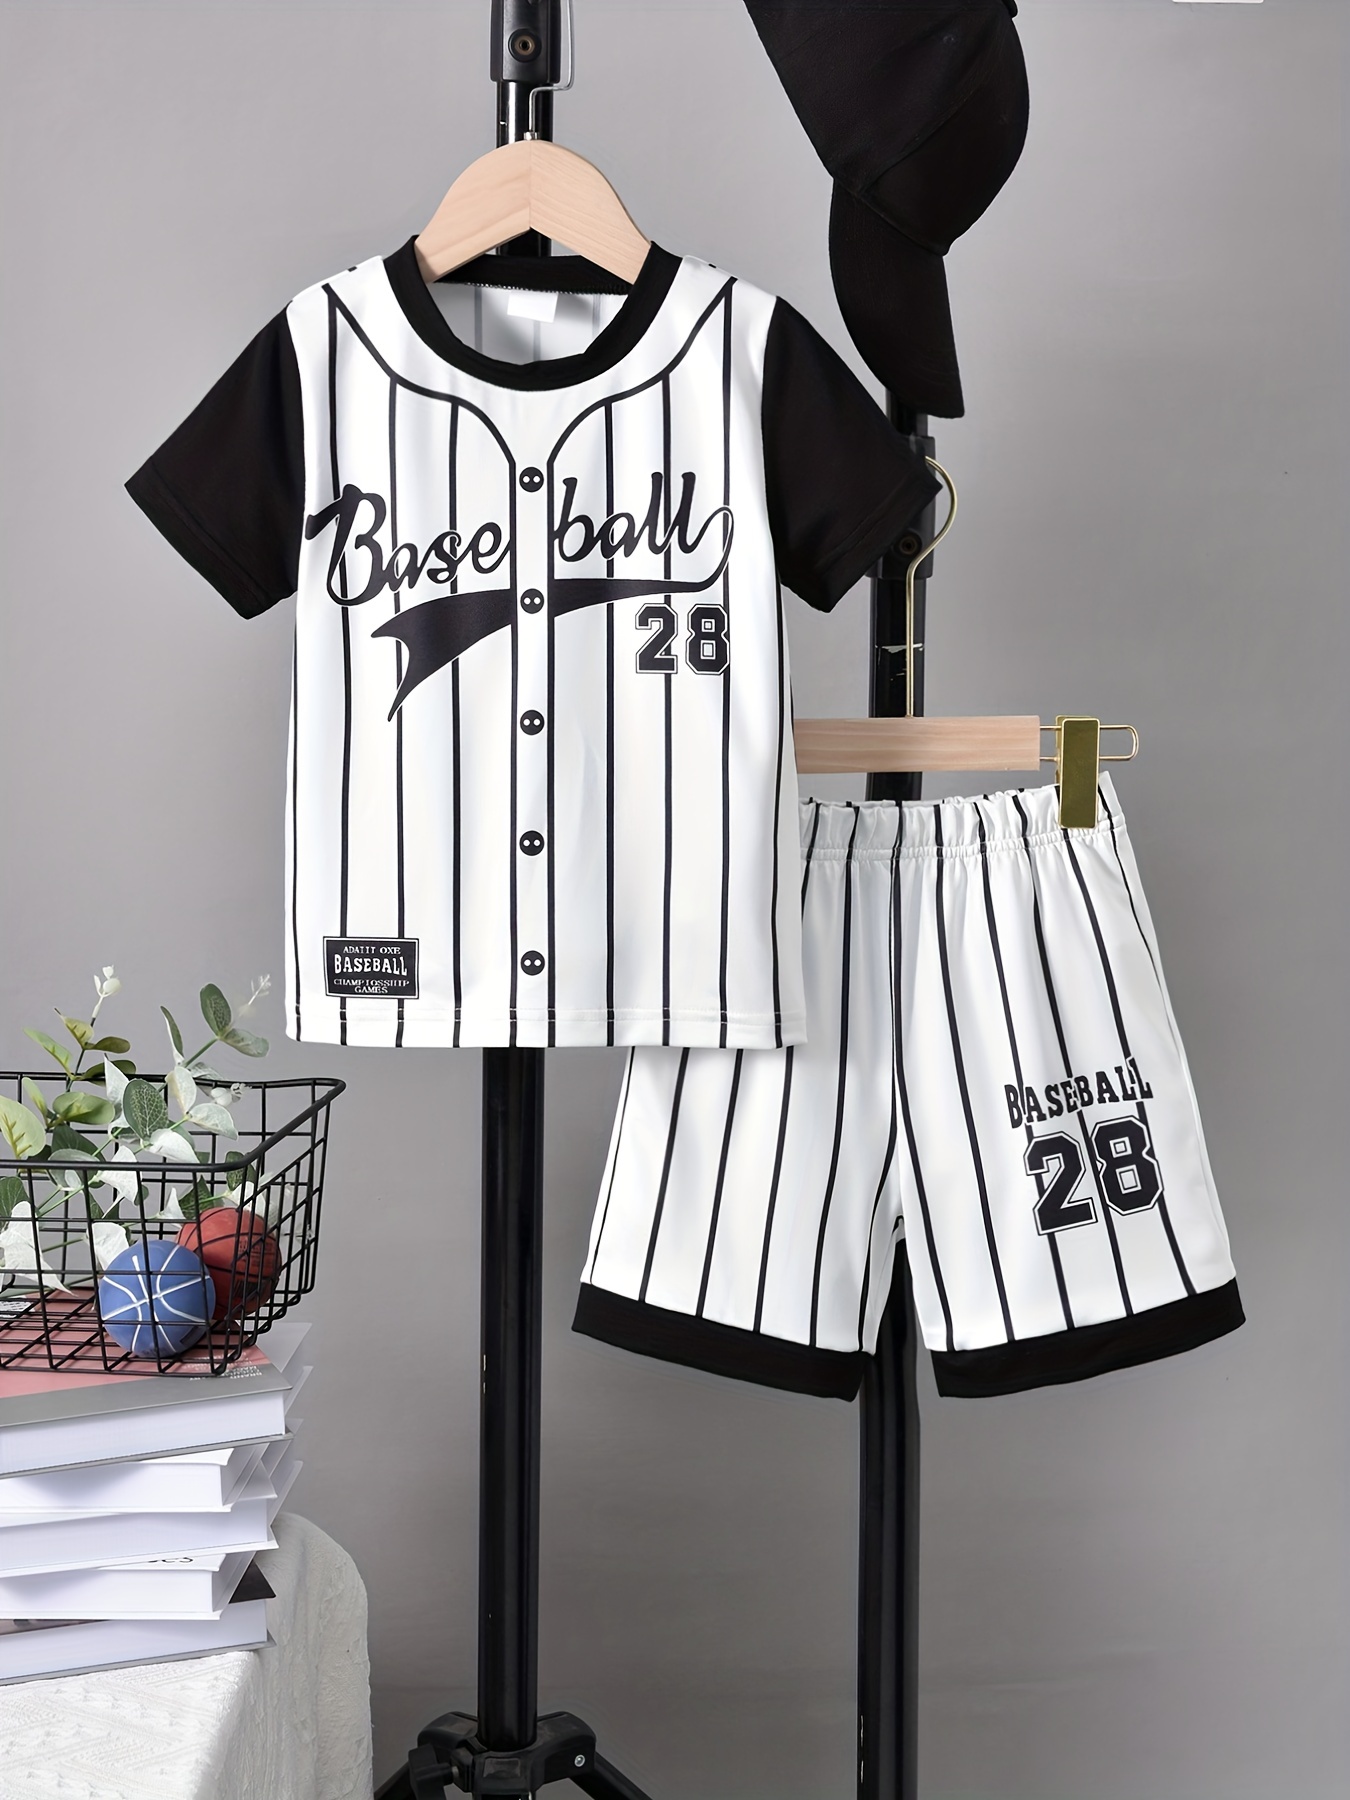 mens baseball jerseys - Google Search  Camisa de beisebol, Camiseta  jersey, Moda masculina